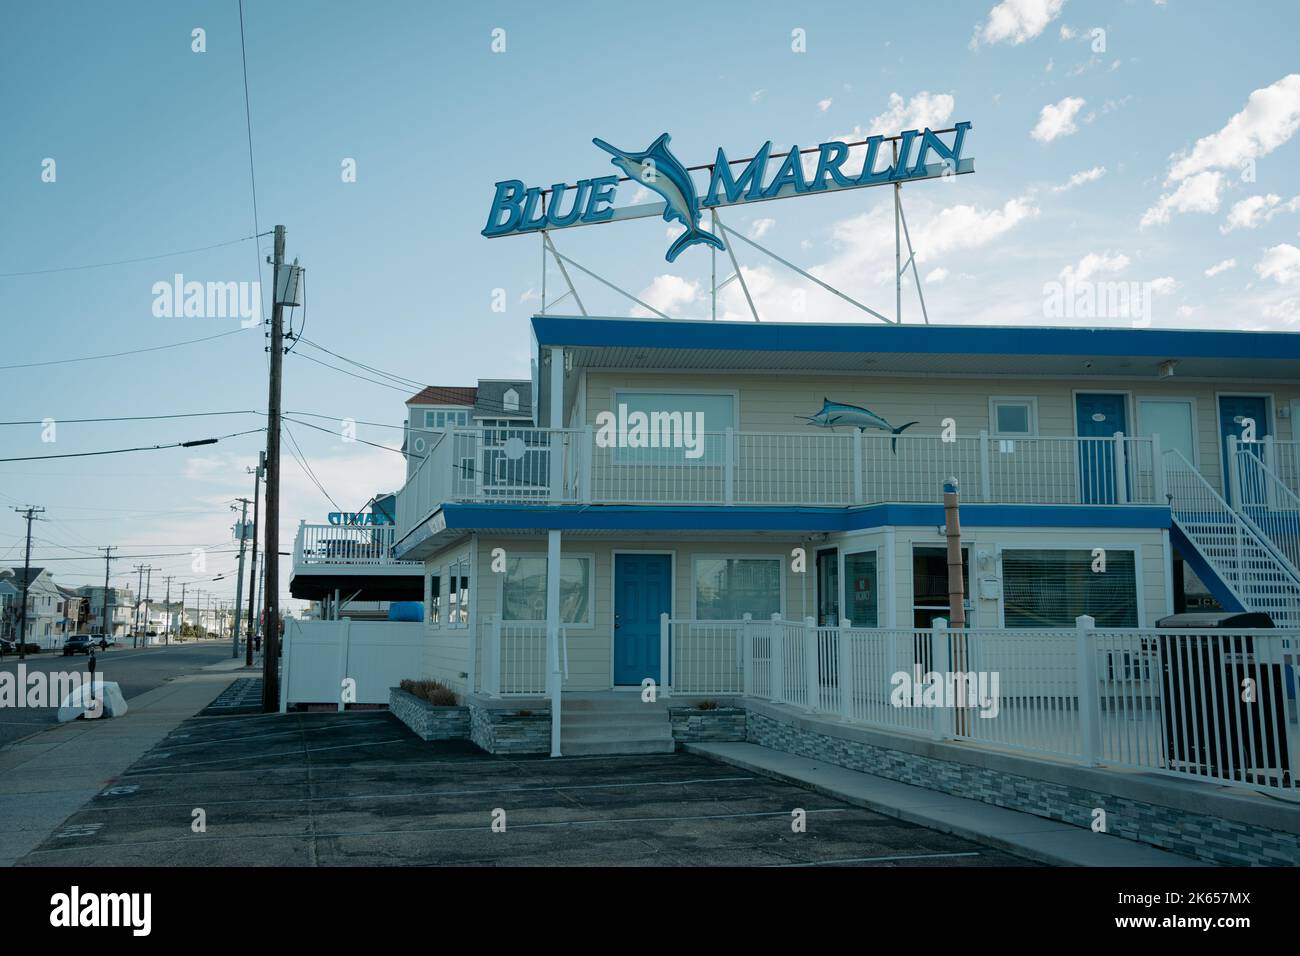 Blue Marlin Motel vintage sign, Wildwood Crest, New Jersey Stock Photo